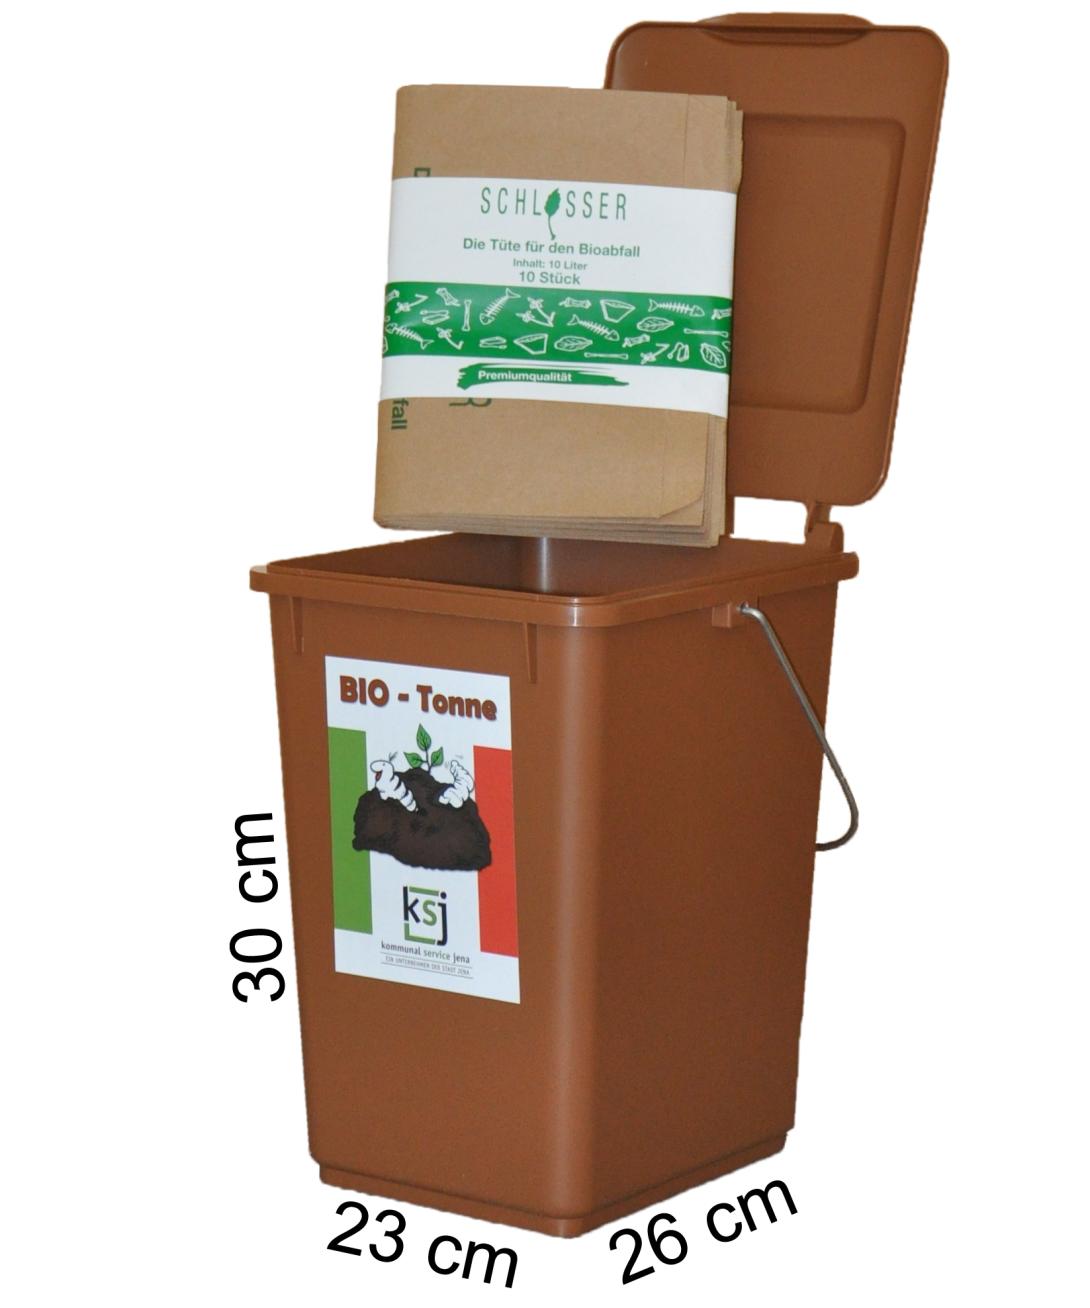 Mini Biowaste container for the kitchen